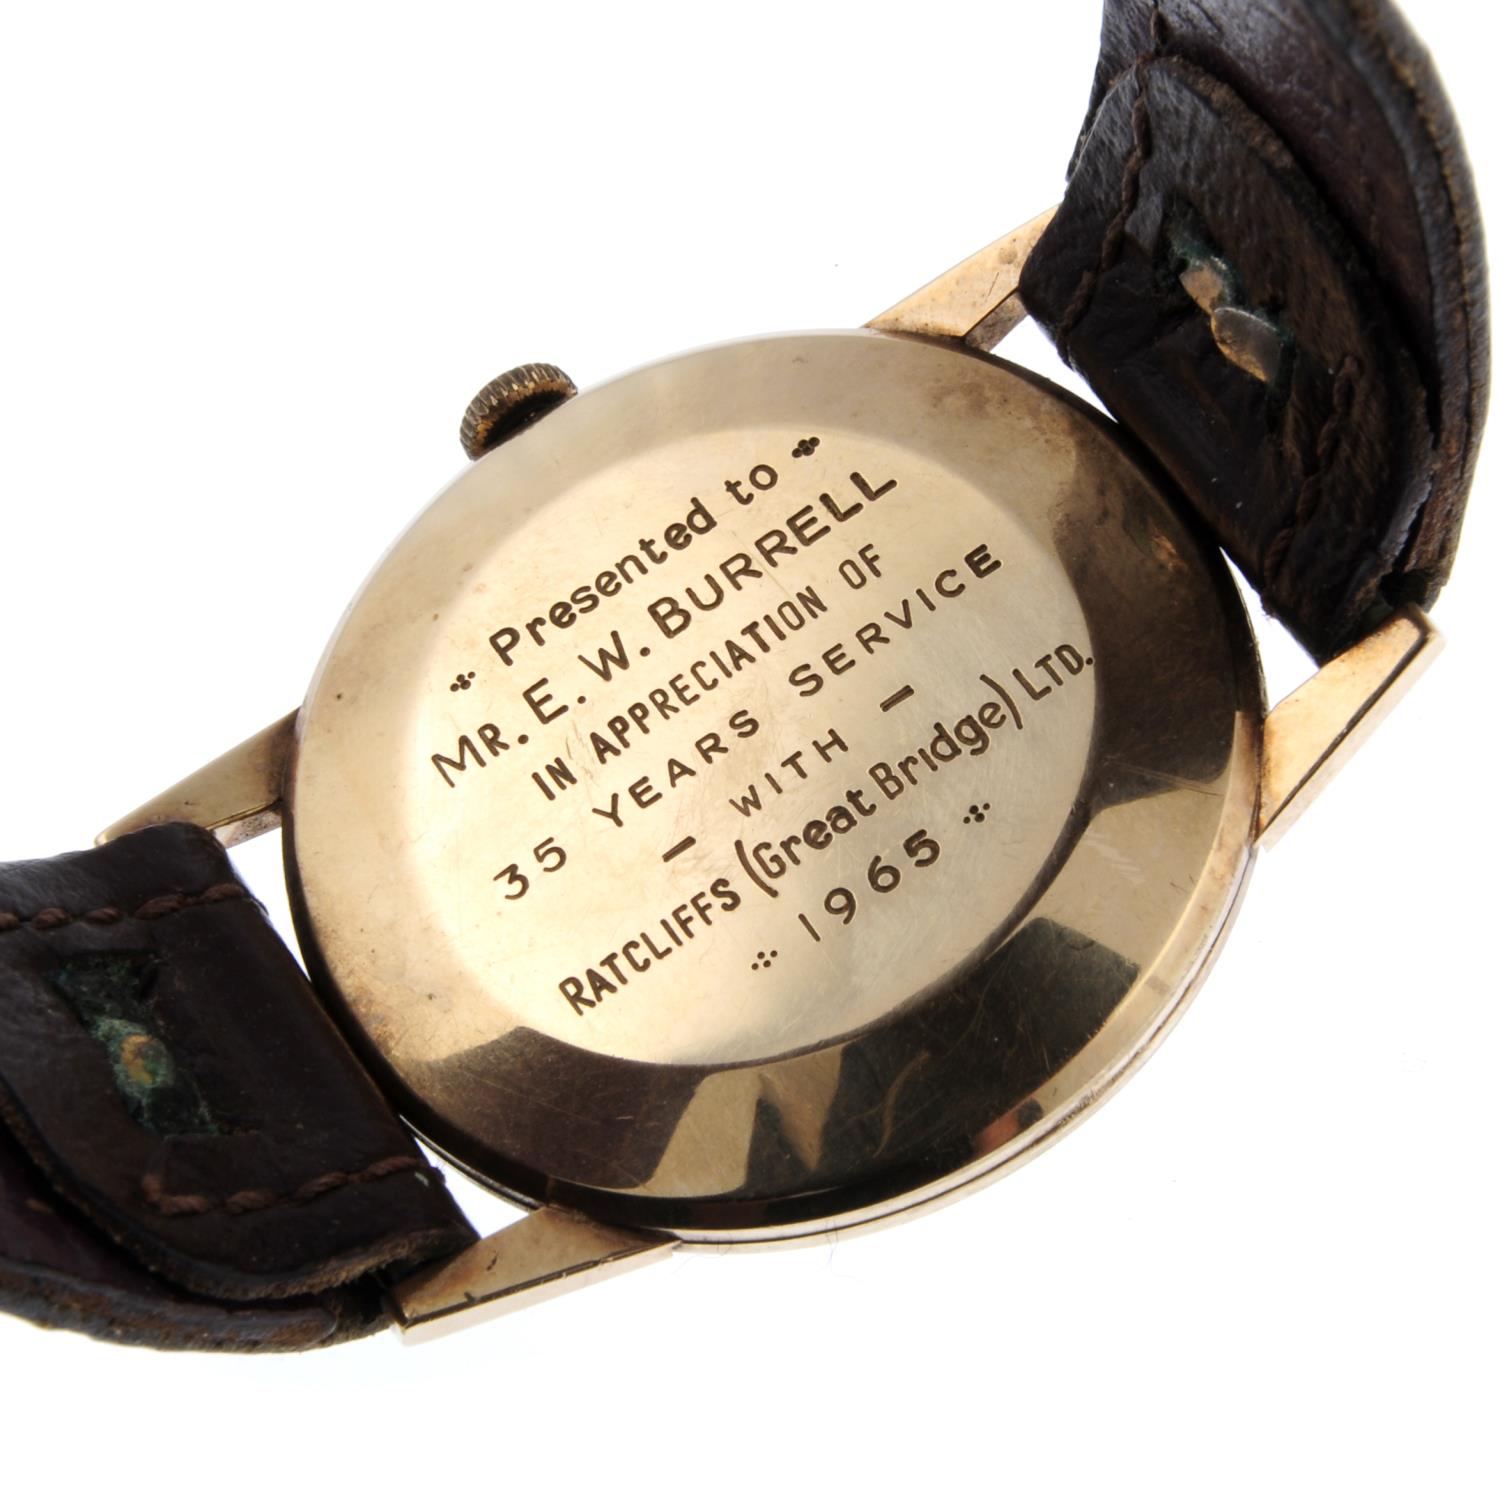 CYMA - a gentleman's wrist watch. - Image 3 of 4